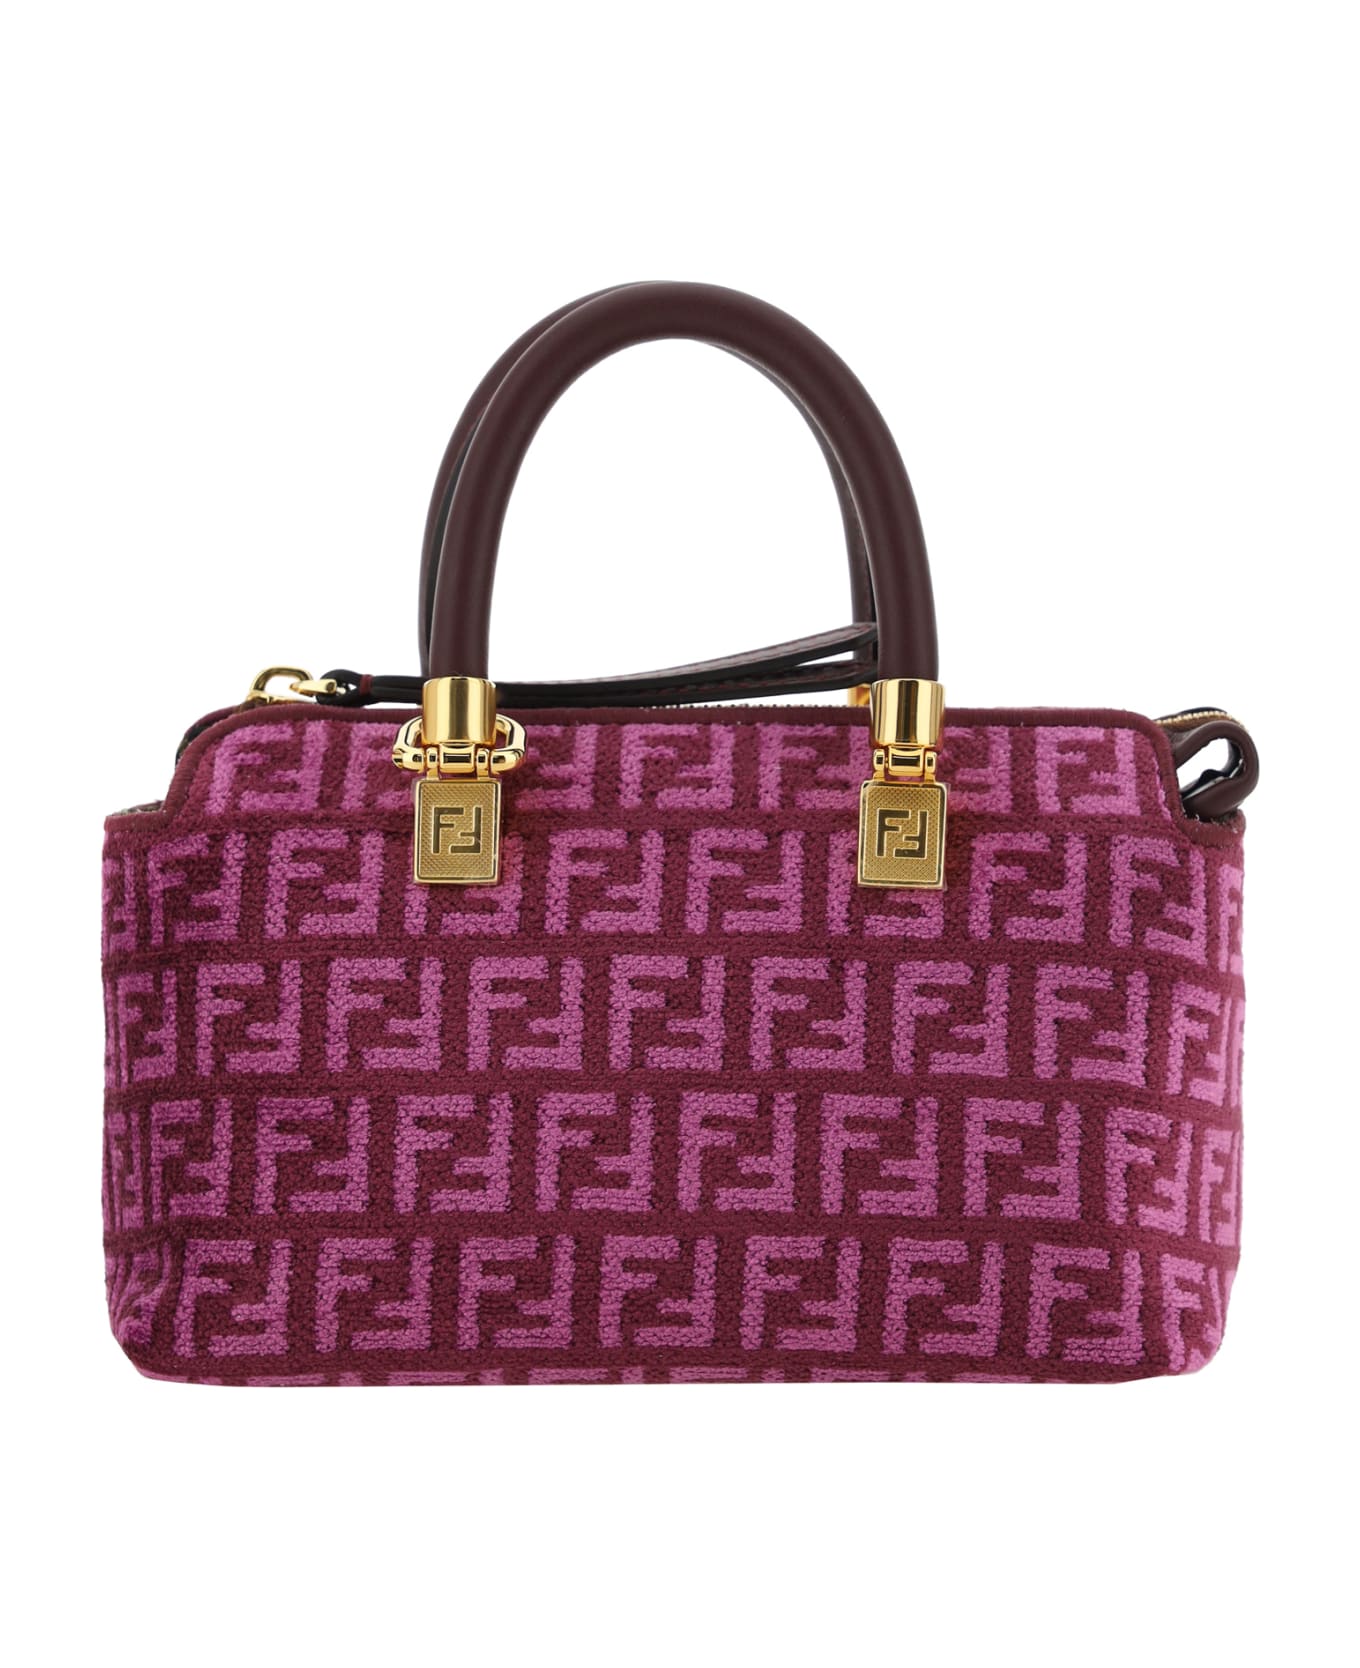 Fendi Mini By The Way Handbag - Pink, brown トートバッグ